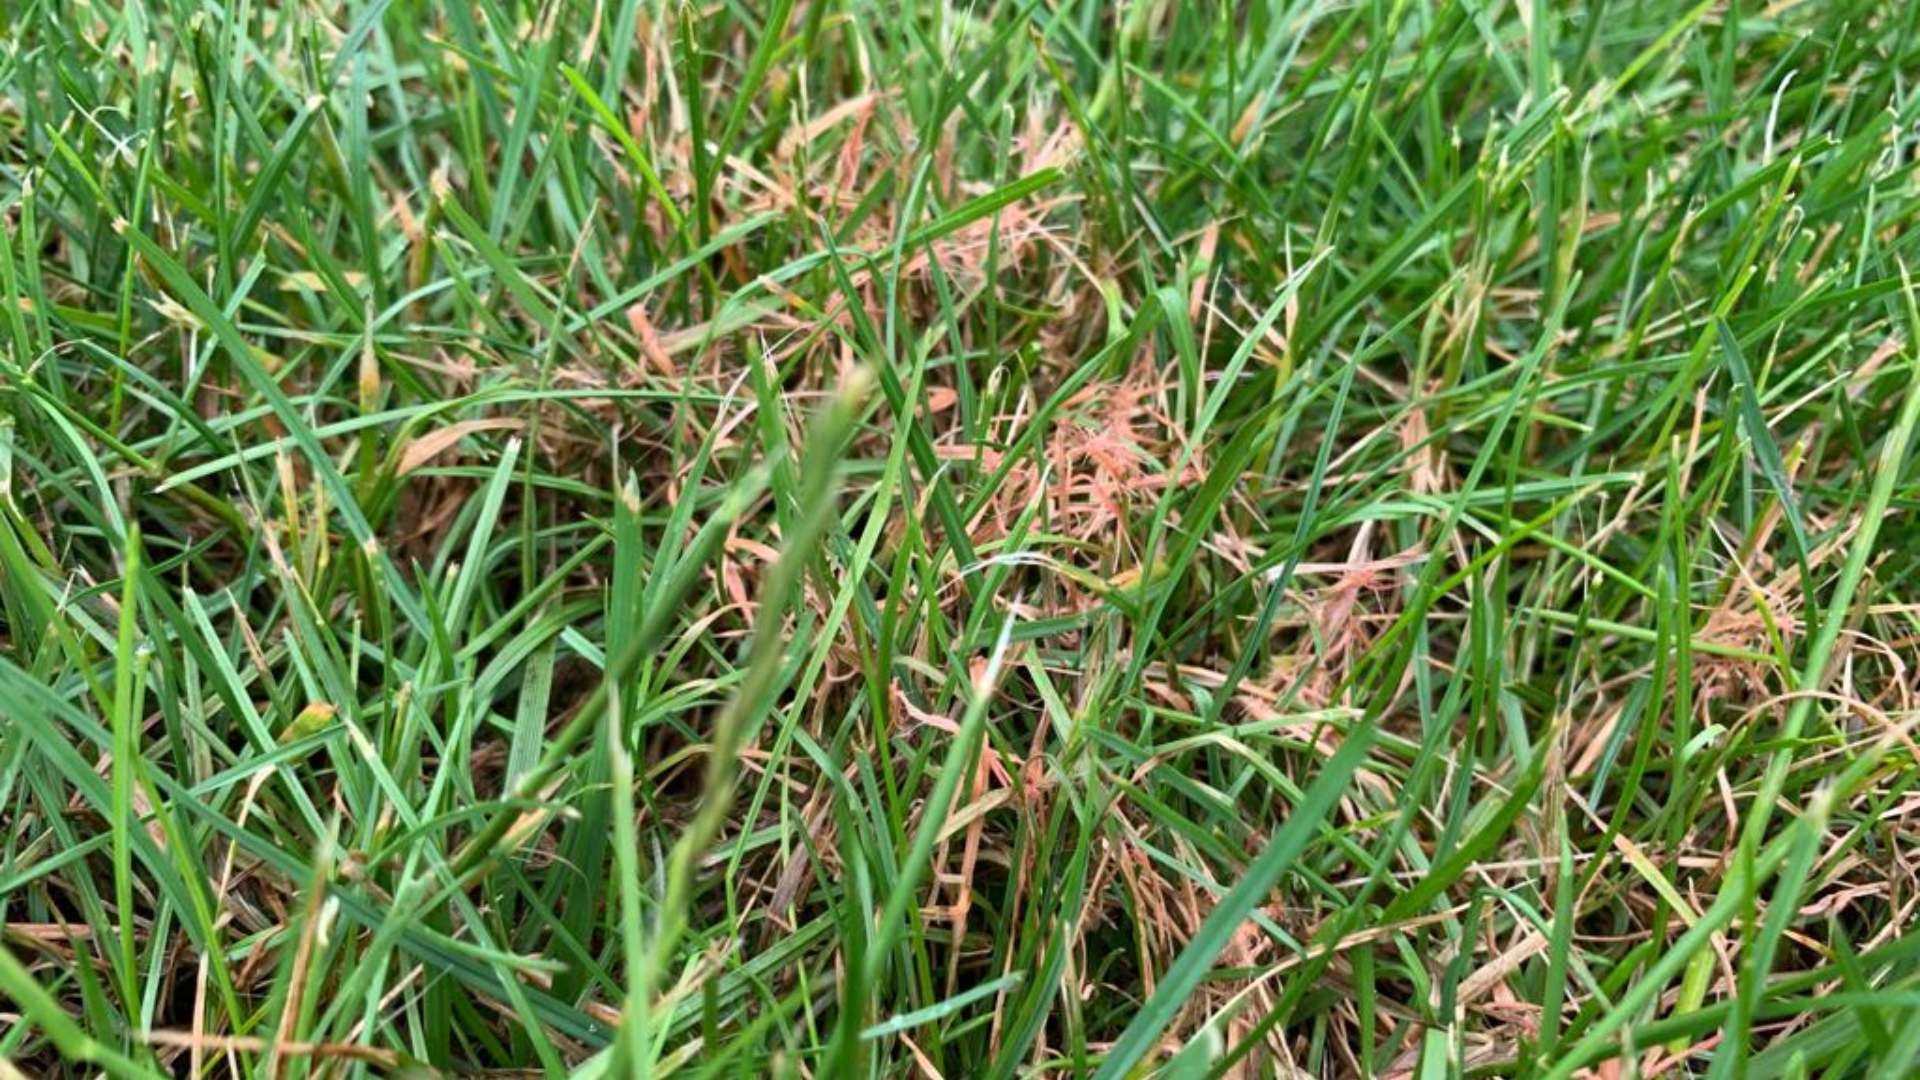 Red thread lawn disease found in client's lawn in Harleysville, PA.